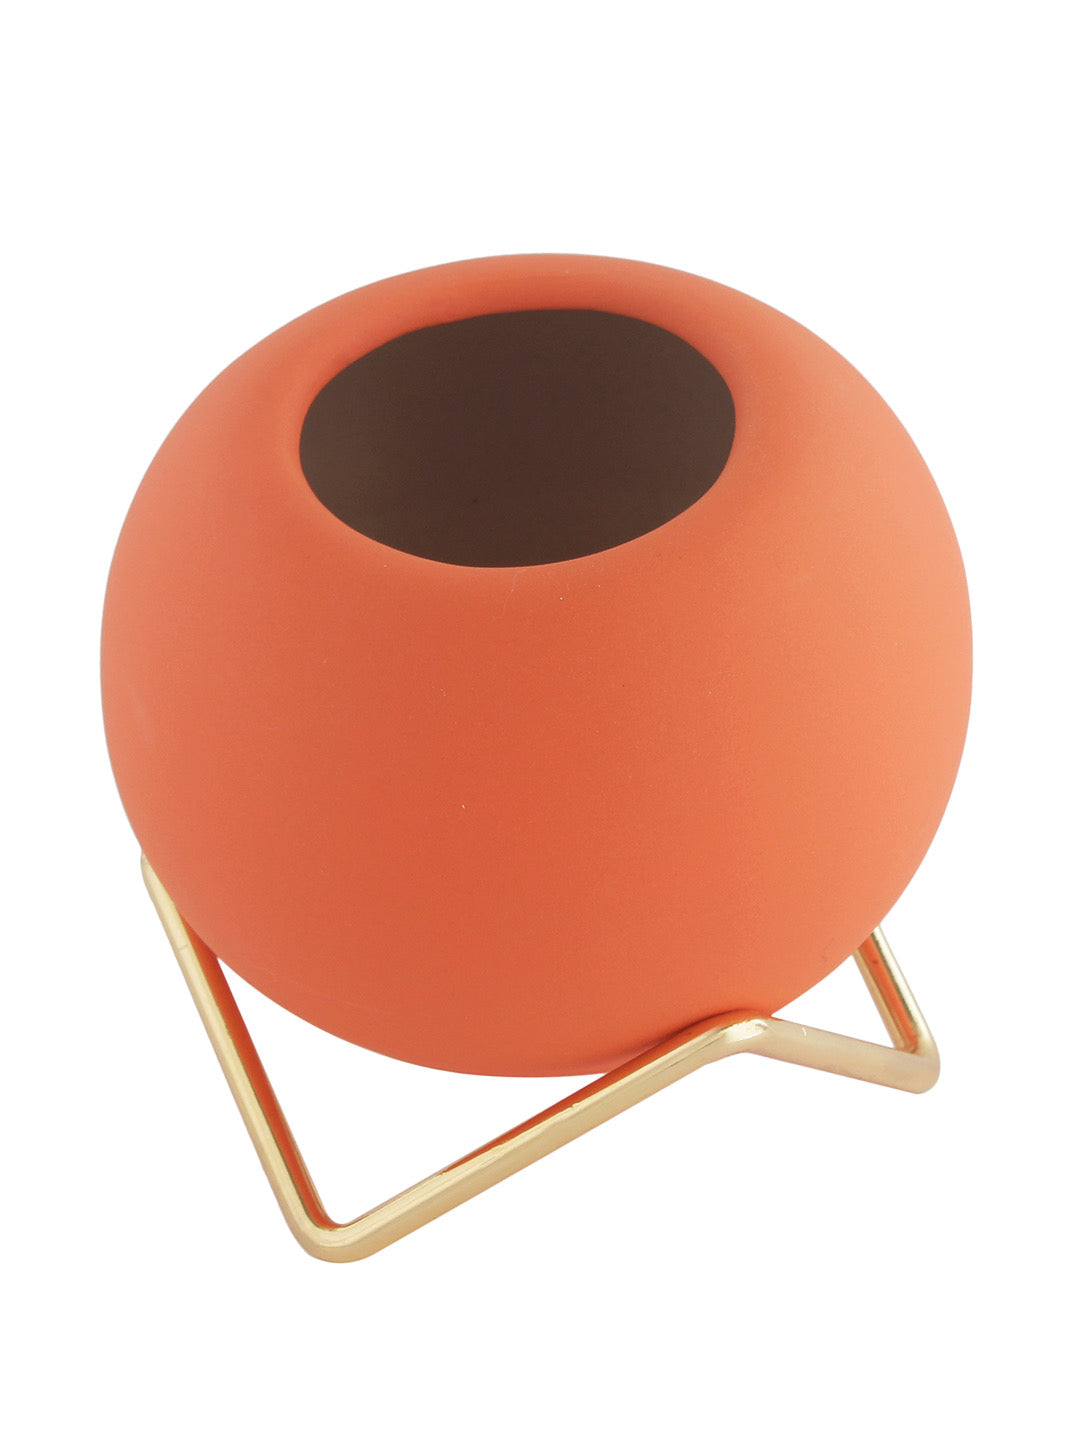 Orange Coloured Ceramic Vase with Golden Stand - Default Title (VAS2020182)